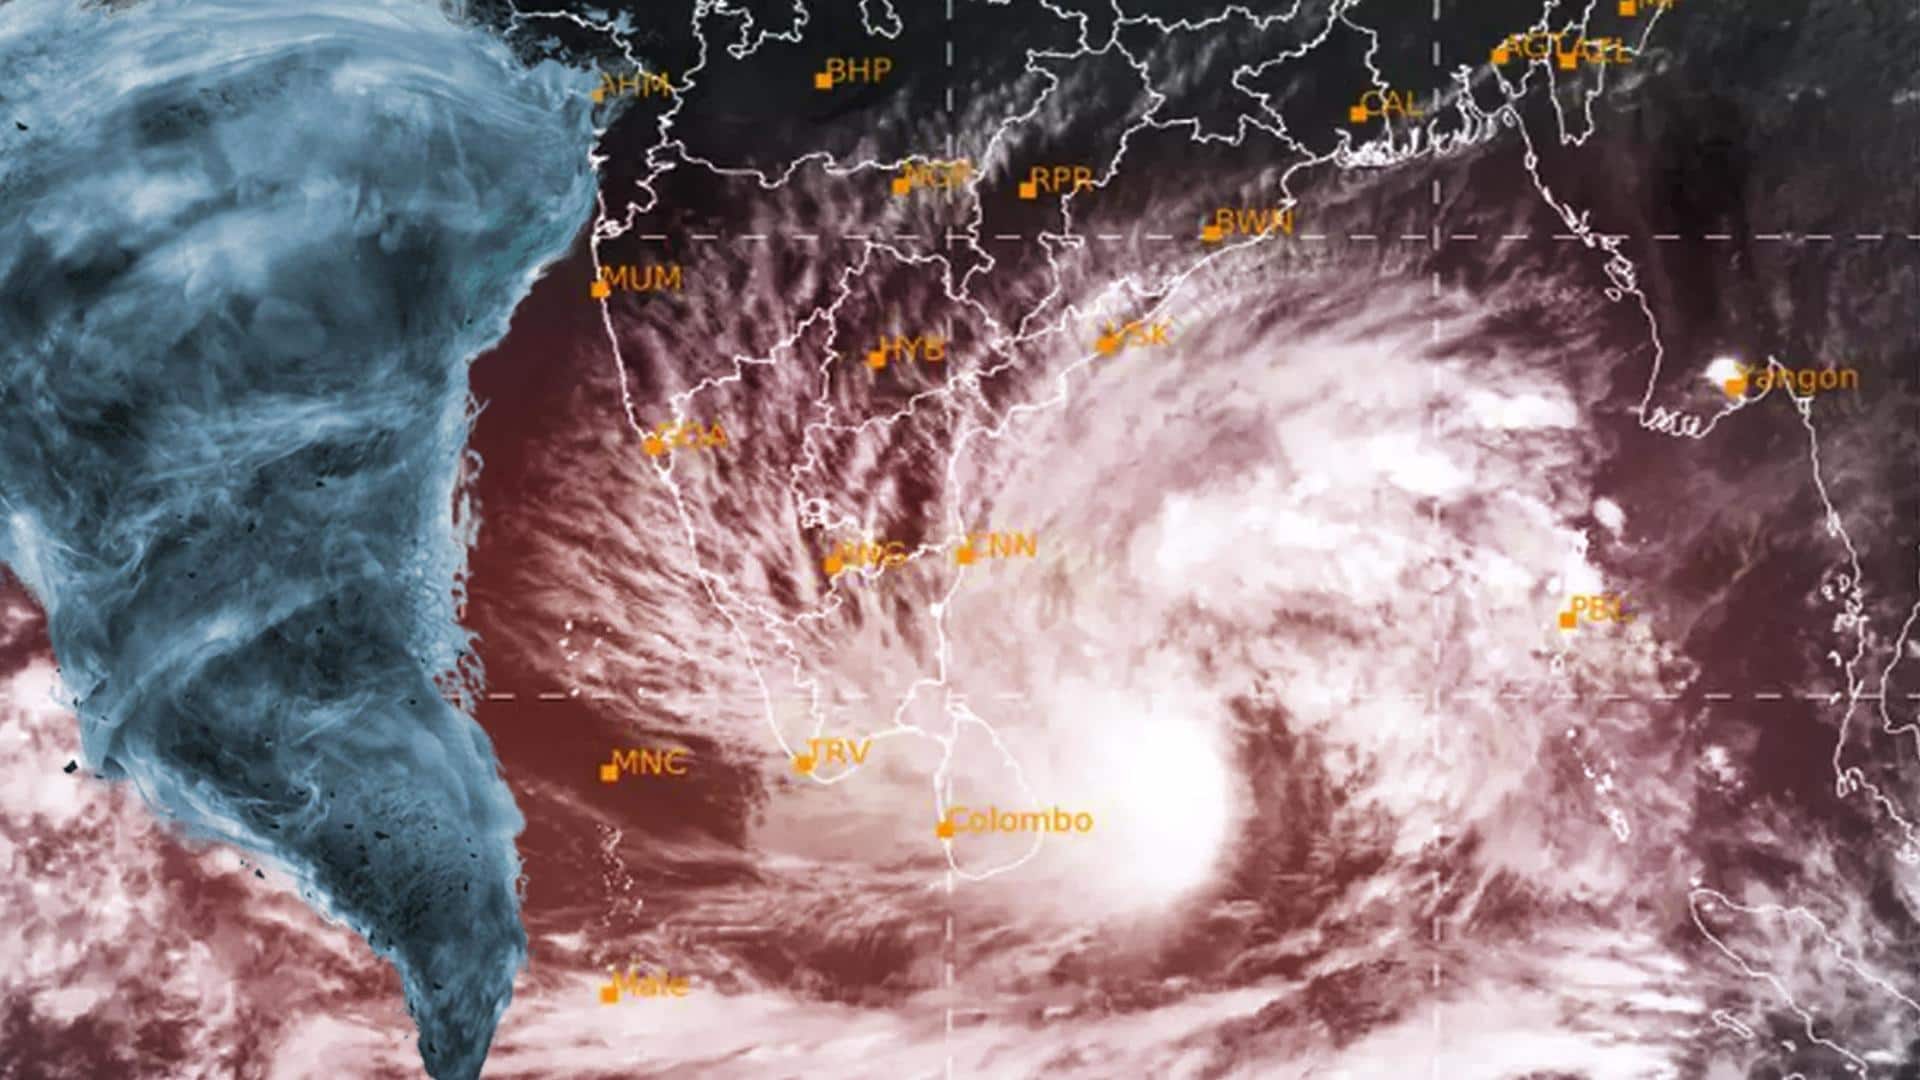 Cyclone Alert for South Tamil Nadu and South Kerala coasts